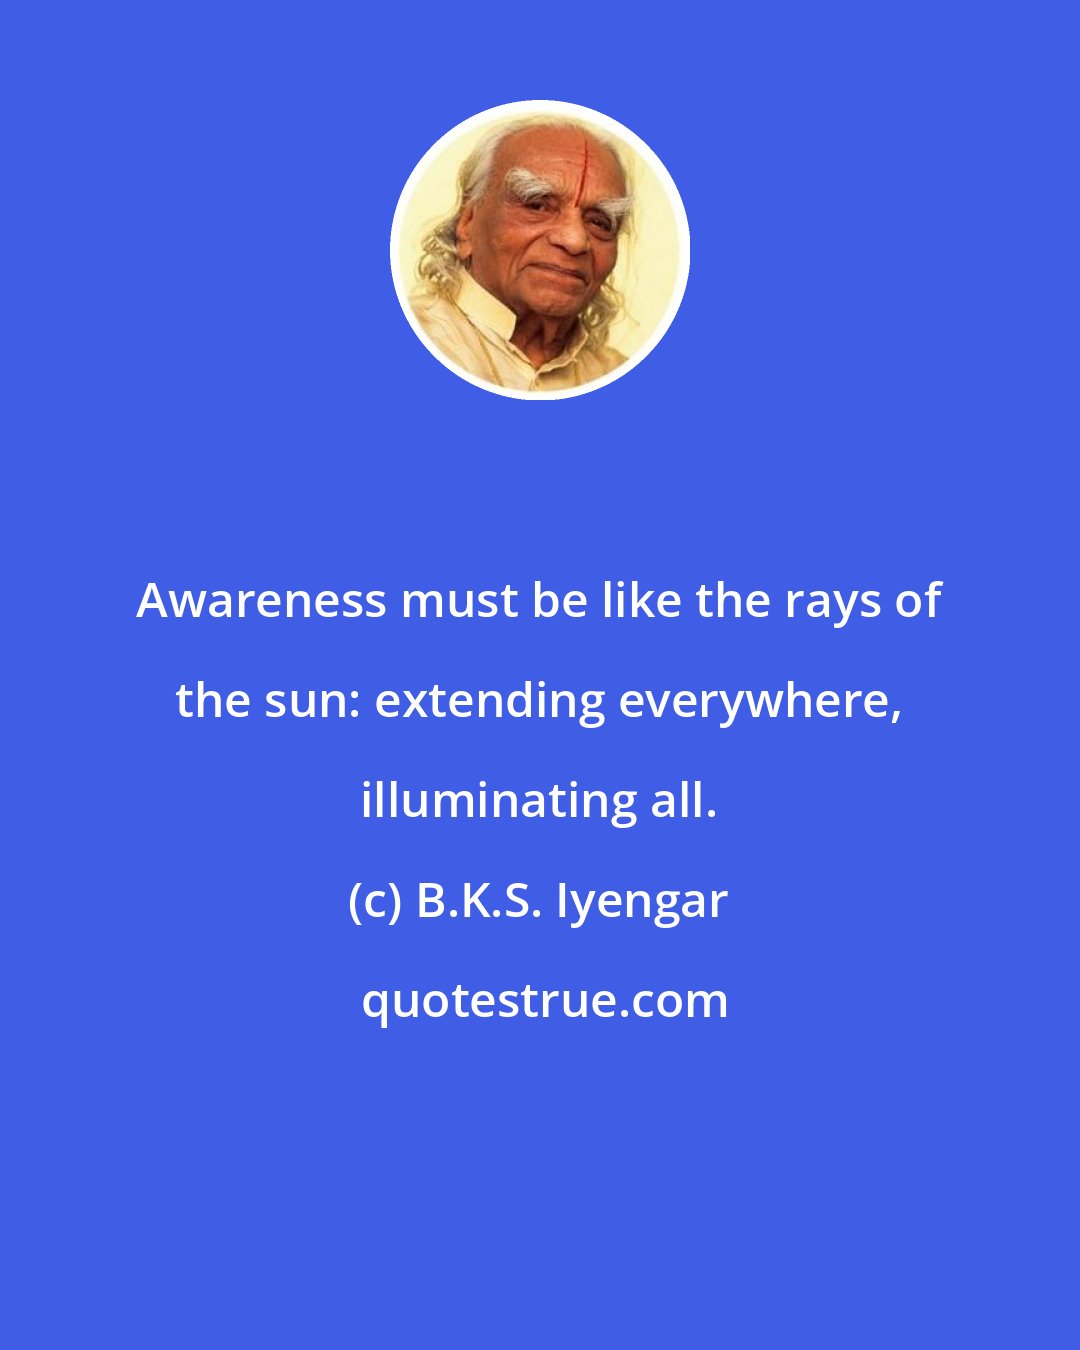 B.K.S. Iyengar: Awareness must be like the rays of the sun: extending everywhere, illuminating all.